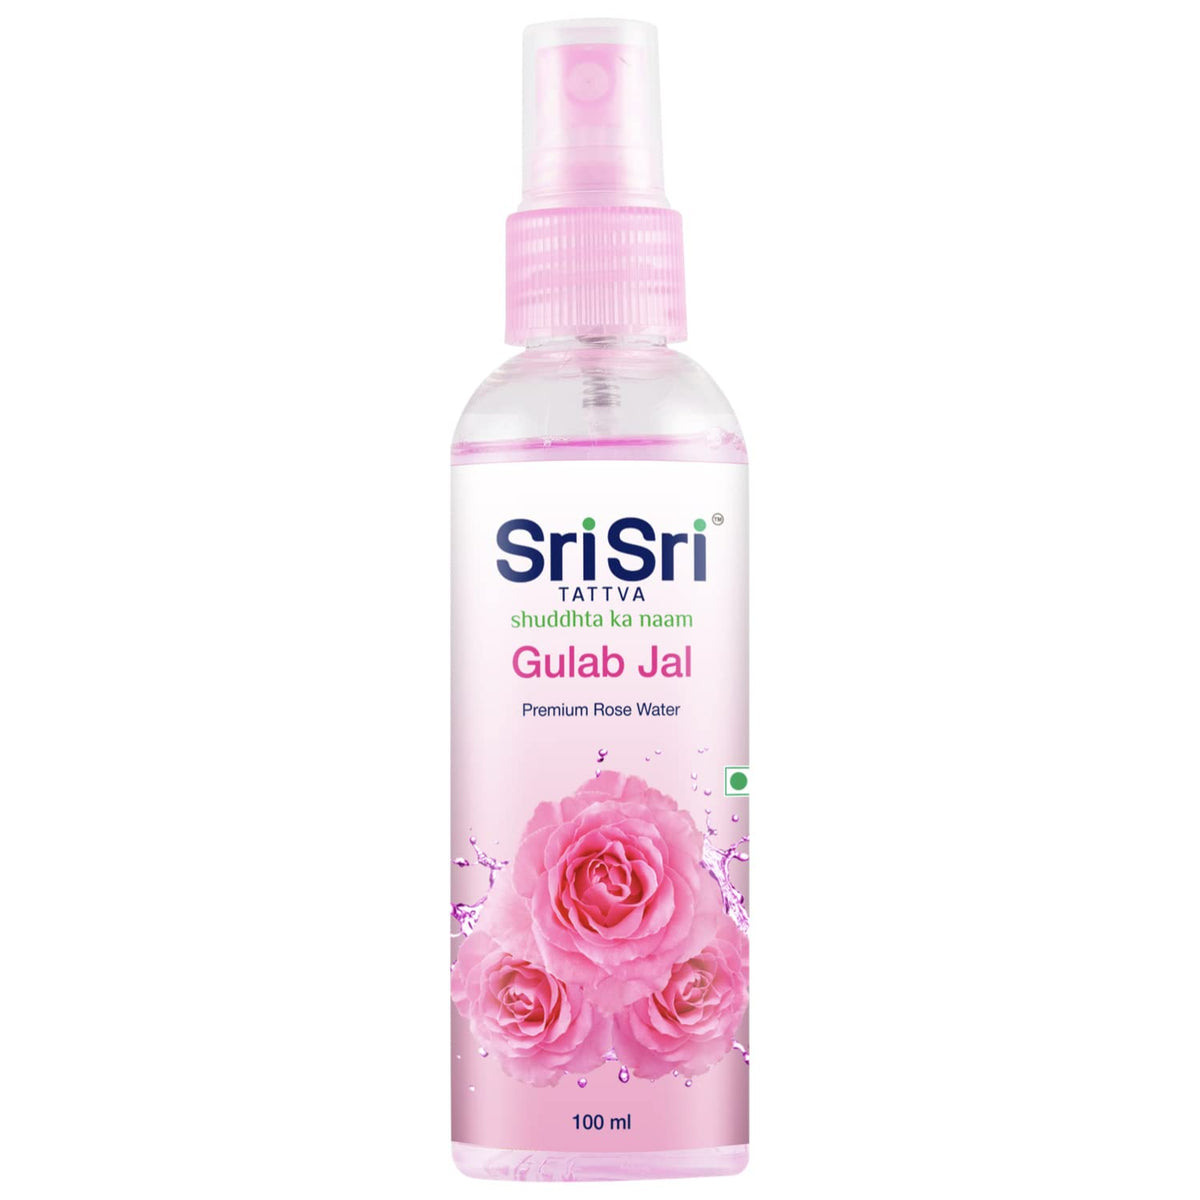 Sri Sri Tattva Gulab Jal Cleanses & Refreshes the Skin Premium Rose Water Spray 100ml